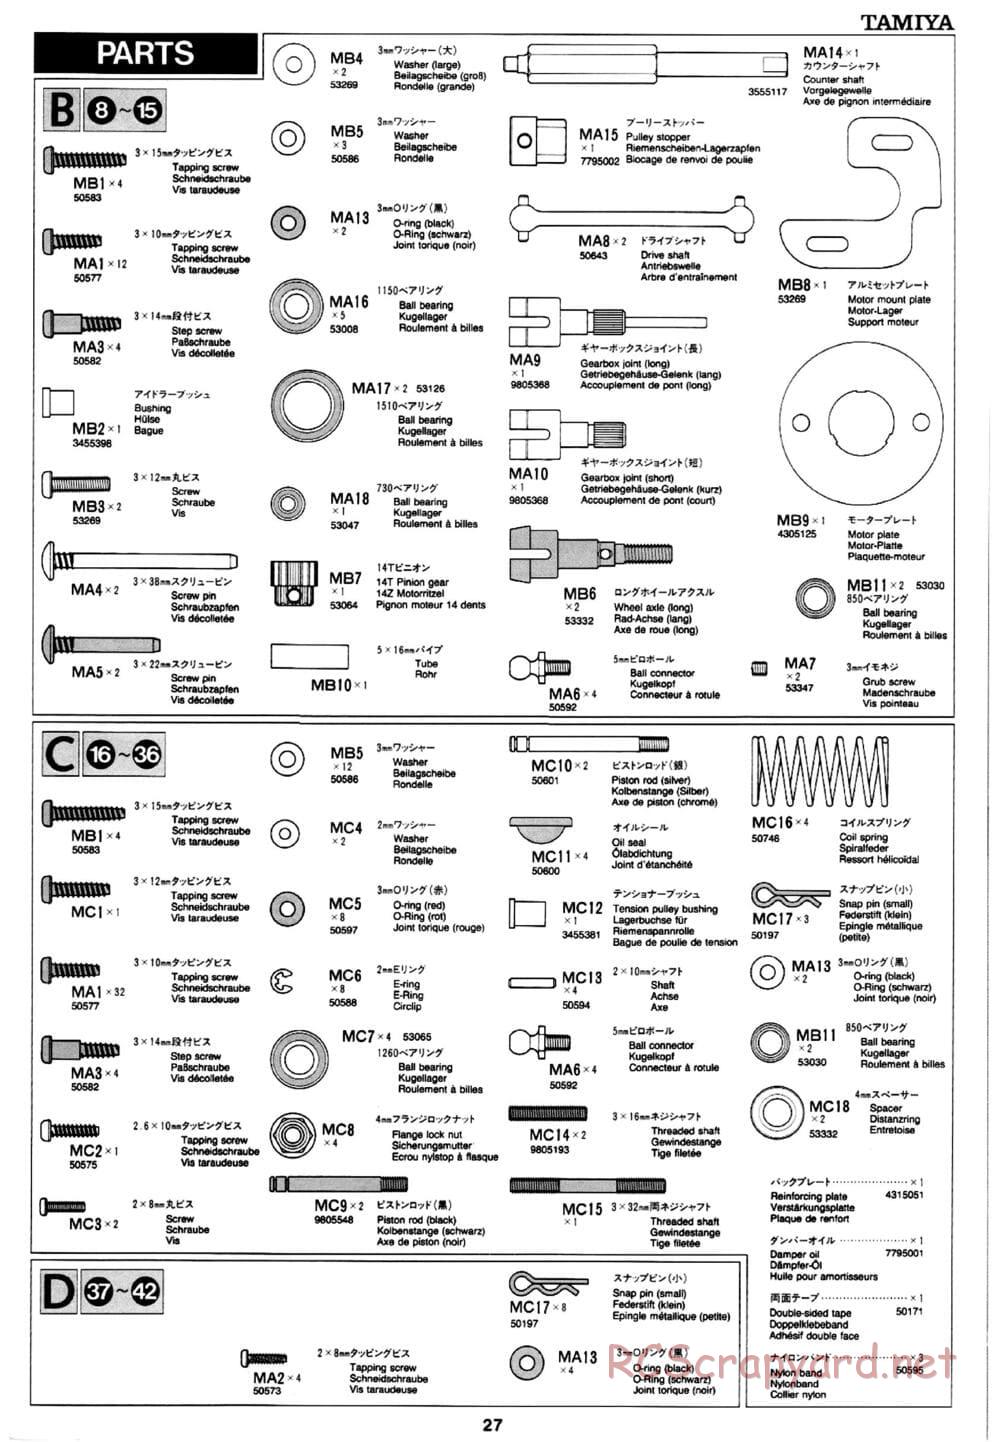 Tamiya - Mobil 1 NSX - TA-03R Chassis - Manual - Page 27